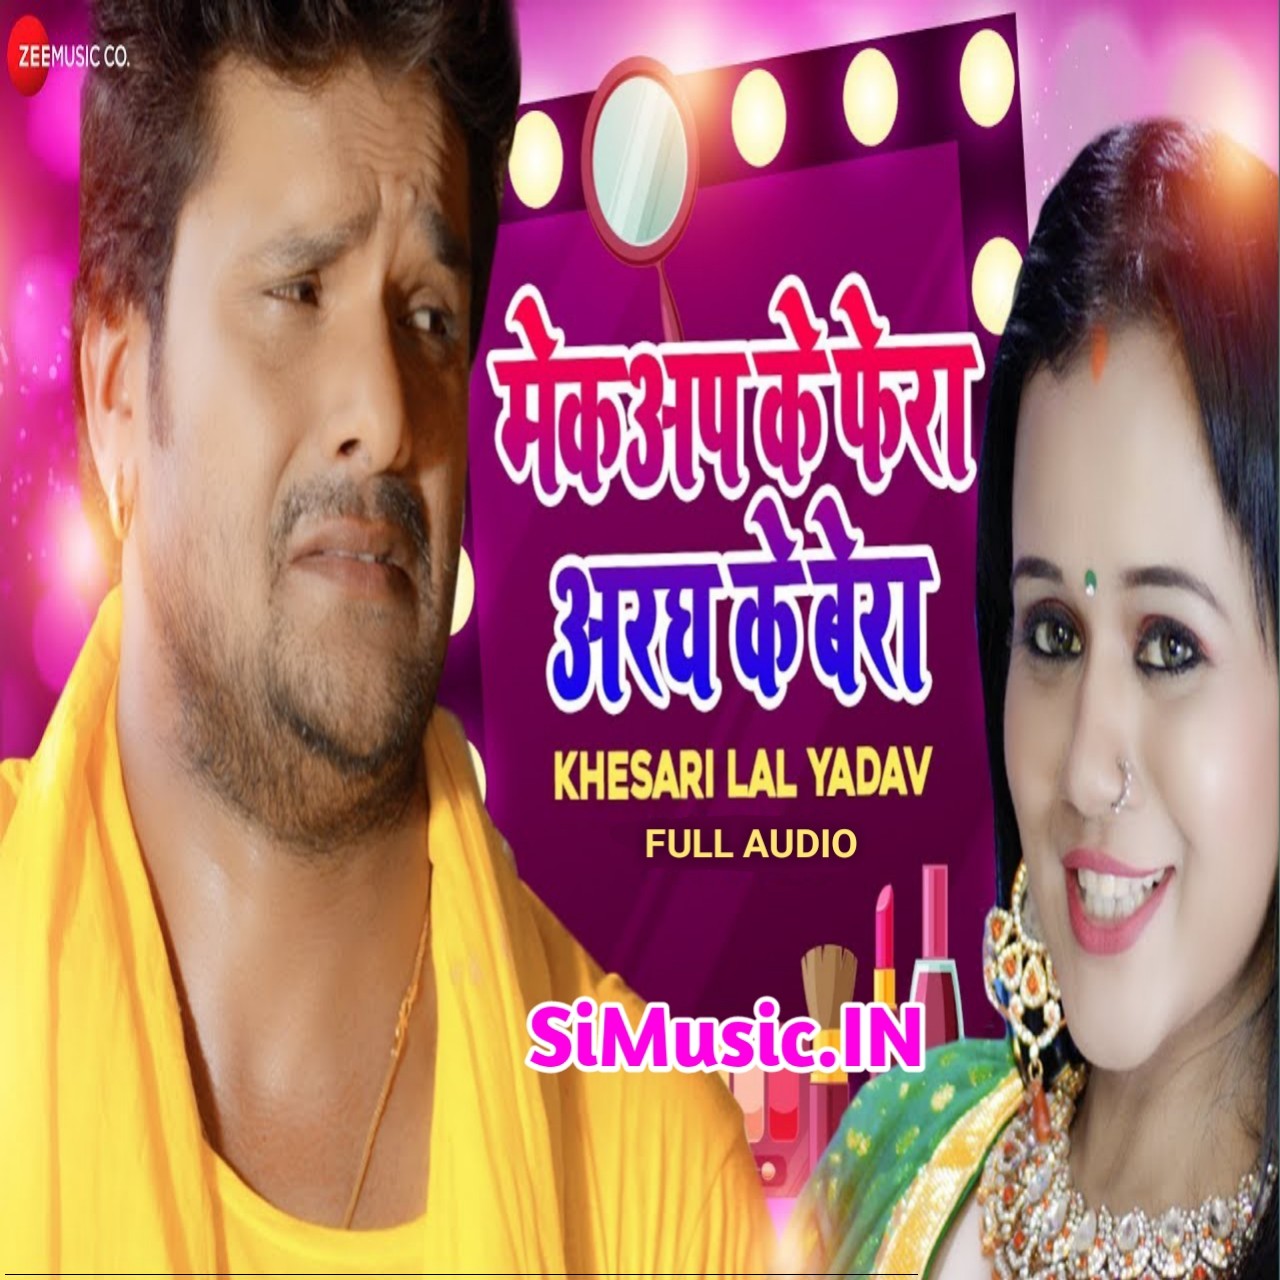 Makeup Ke Fera Aragh Ke Bera Khesari Lal Yadav Priyanka Singh 2019 Mp3 Songs